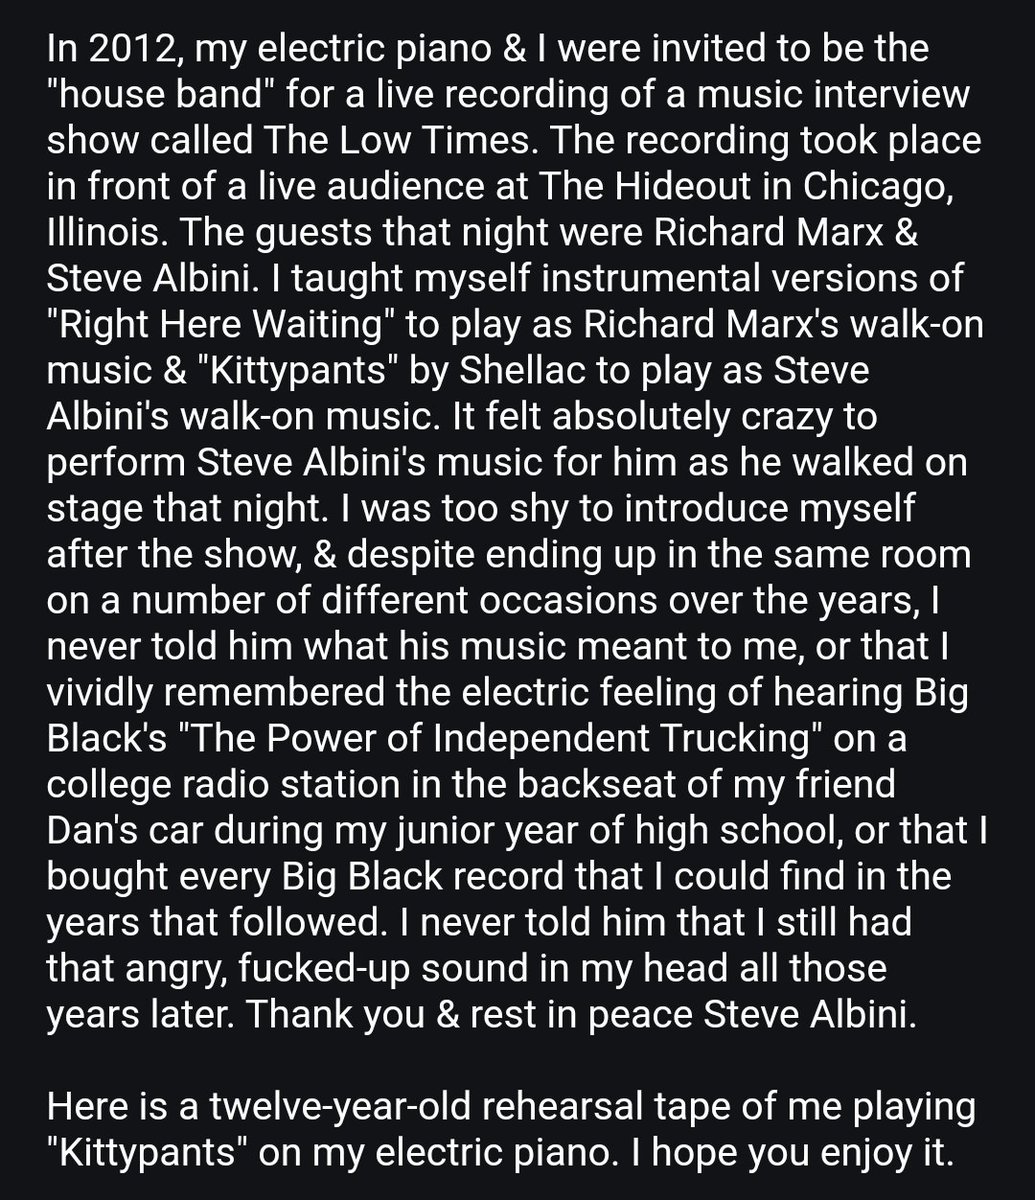 Thank you & rest in peace Steve Albini soundcloud.com/advance-base/k…